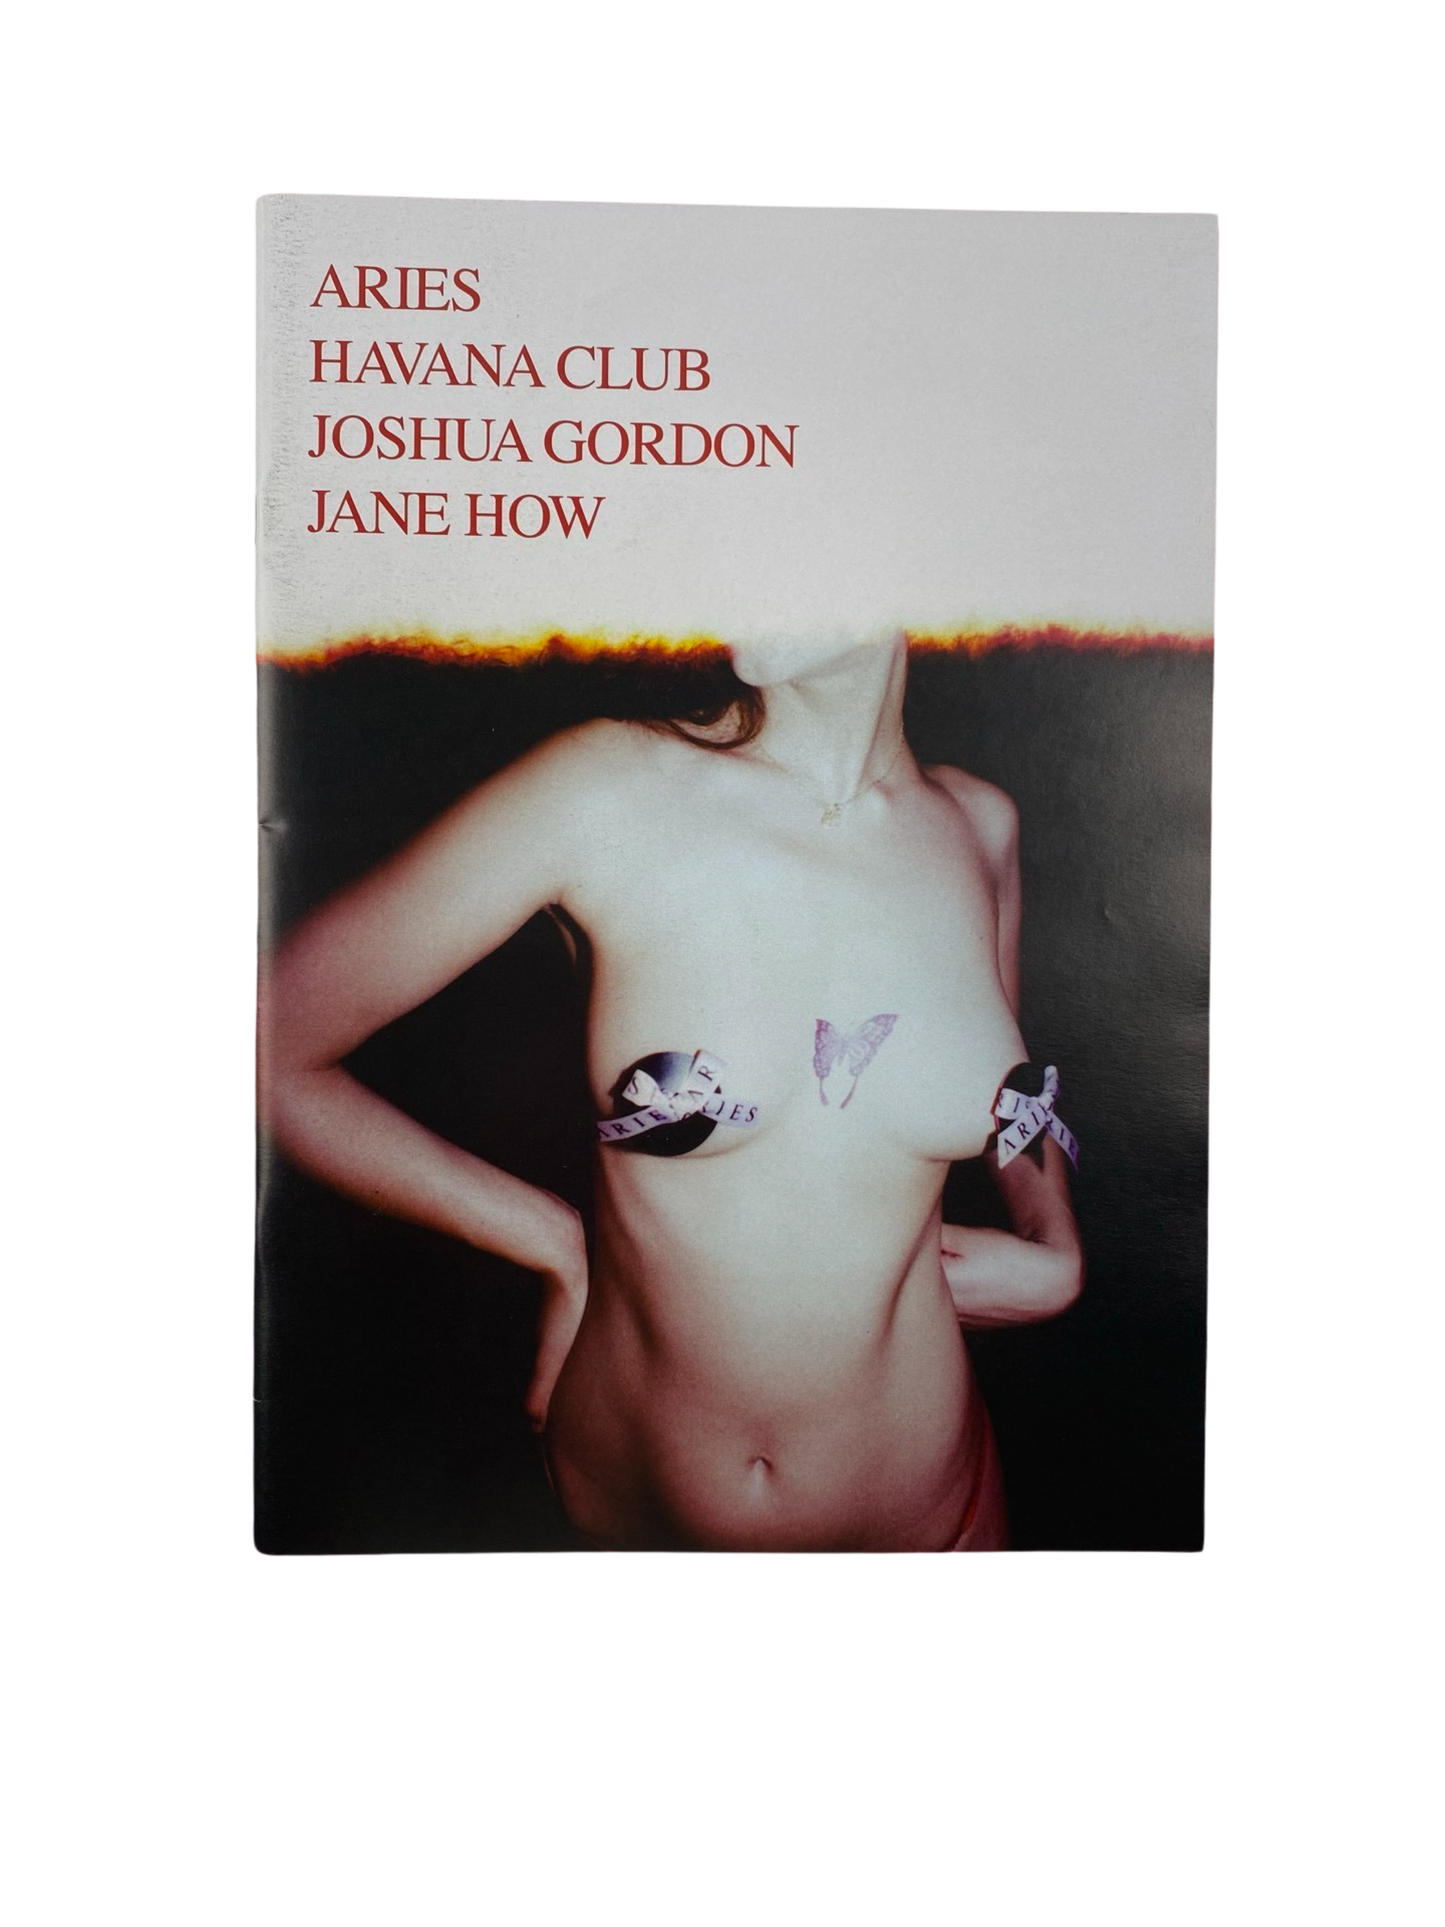 Aries Buch x Havana Club "Butterfly" -red, die sist das extra heft dazu , Aries Havana Club, Joshua Gordon, Jane How